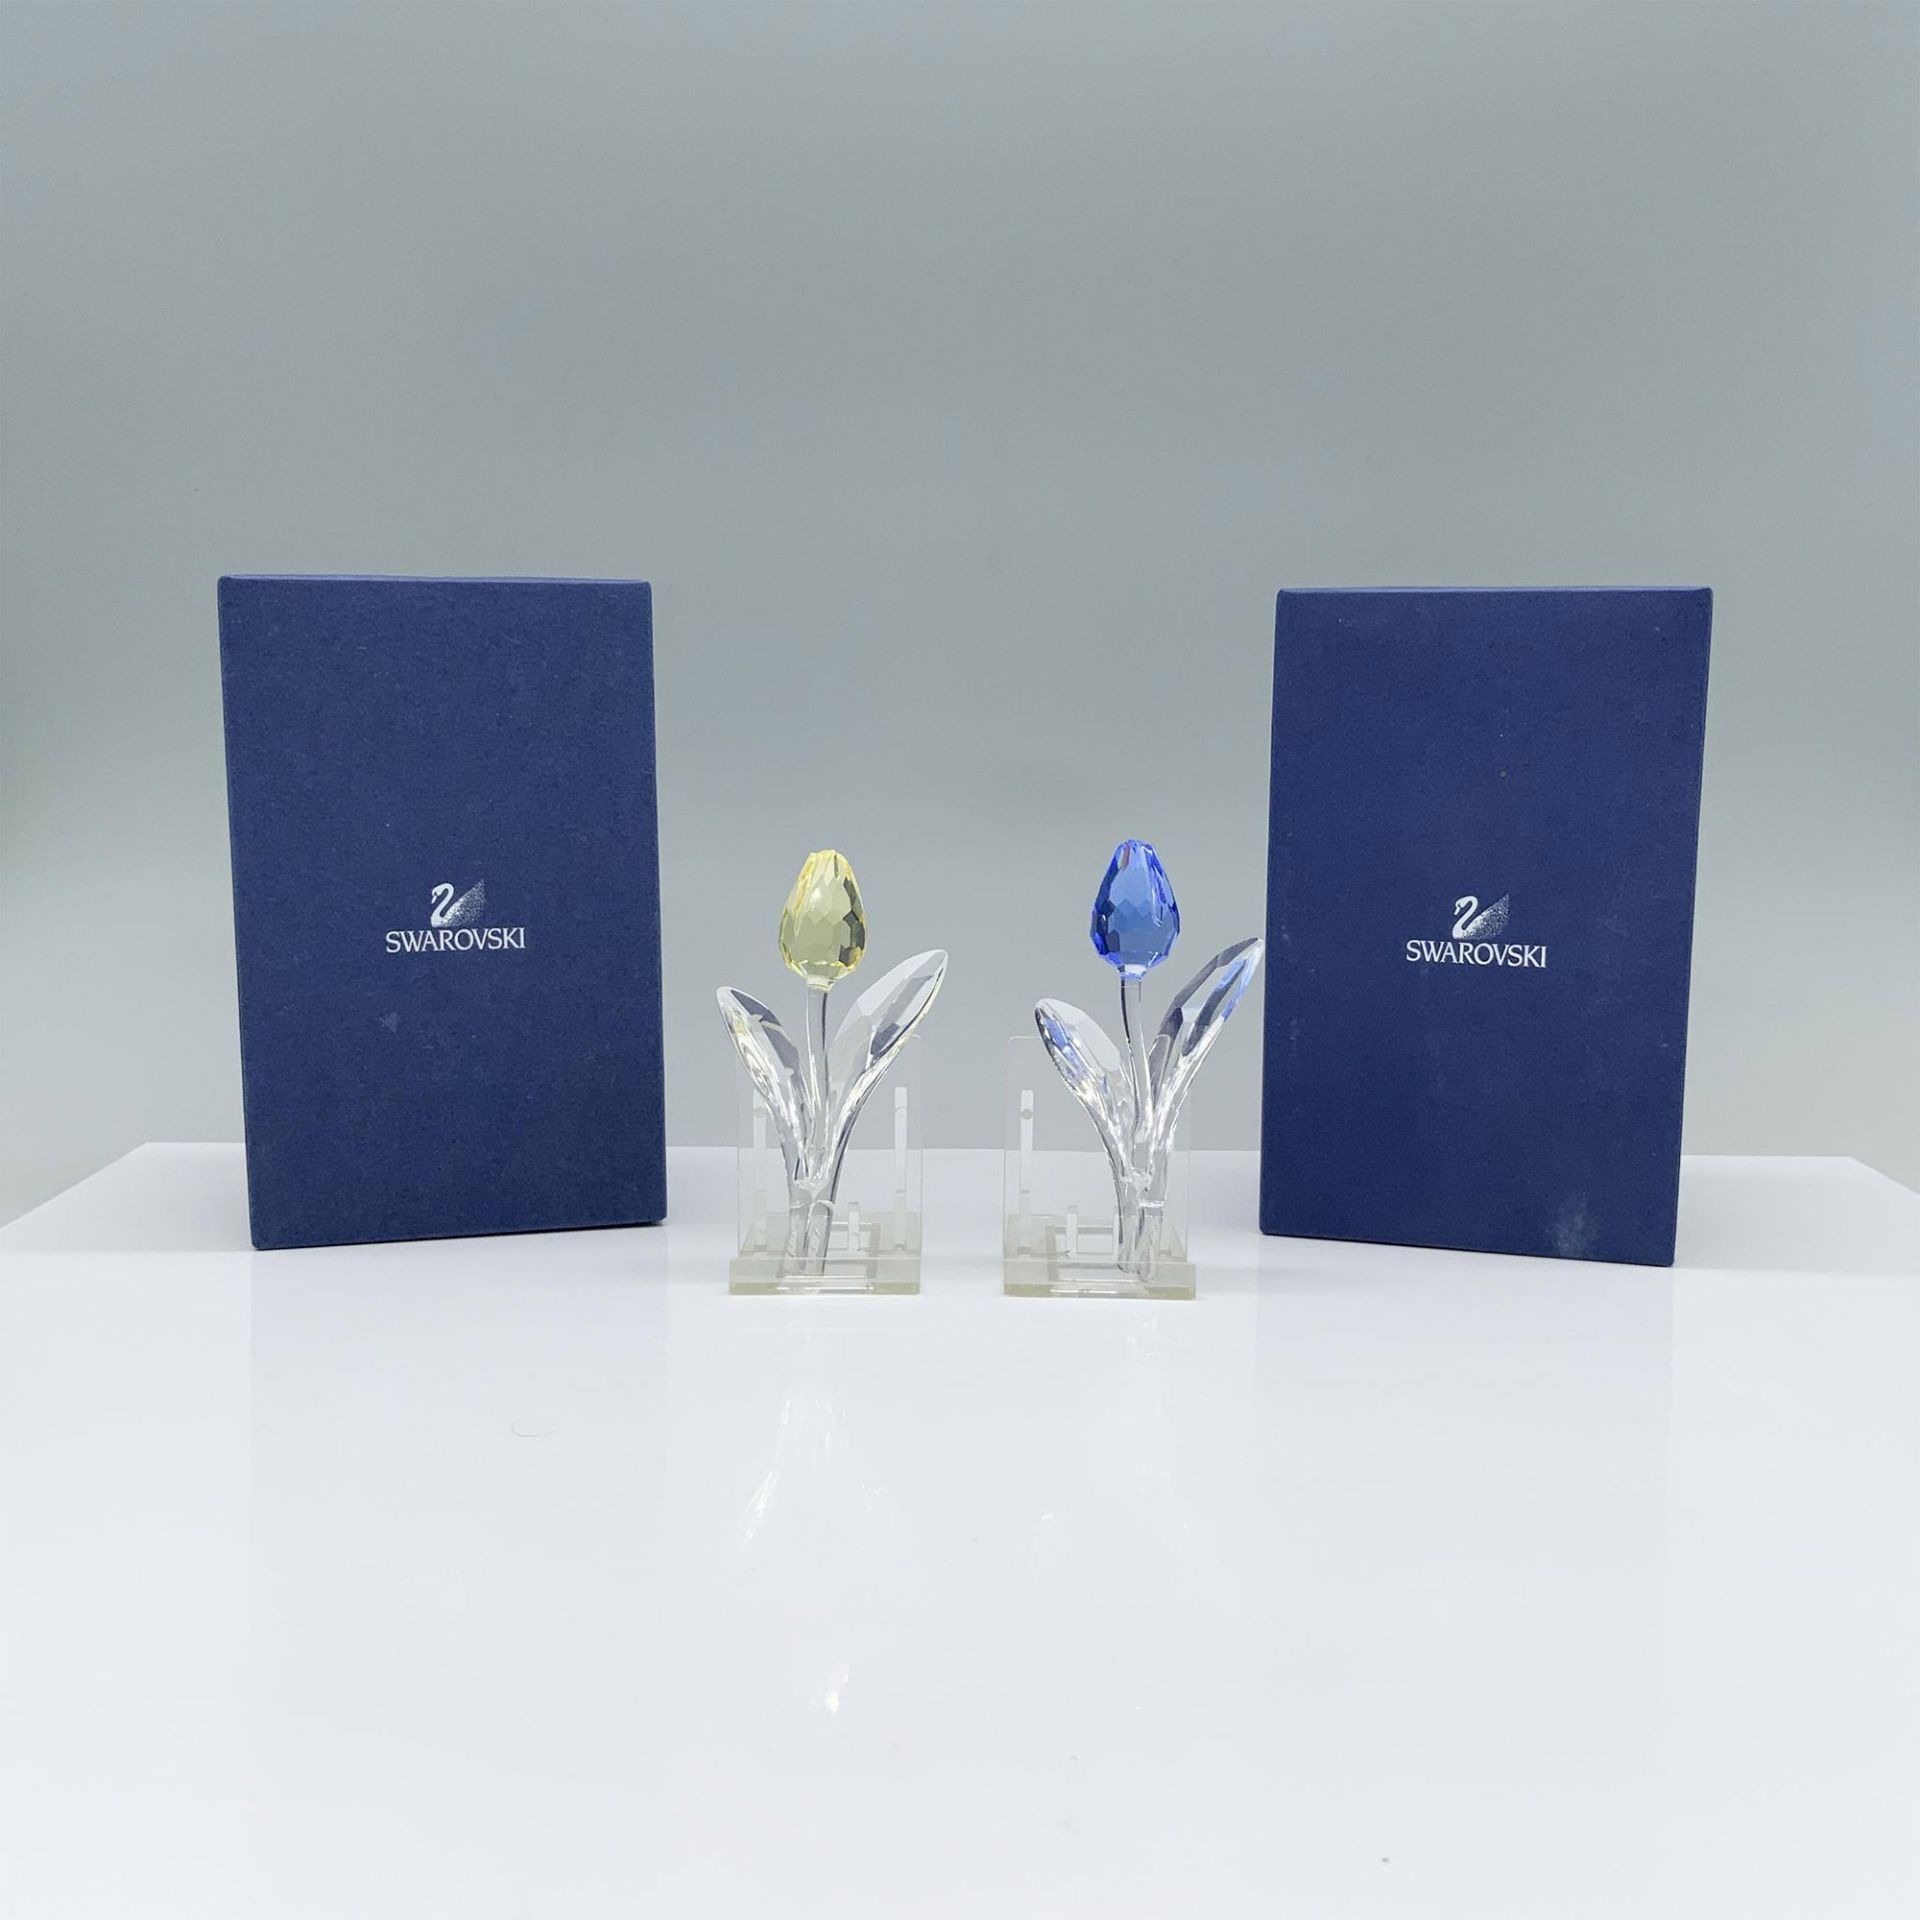 2pc Swarovski Crystal Figurines, Blue and Yellow Tulip - Image 4 of 4